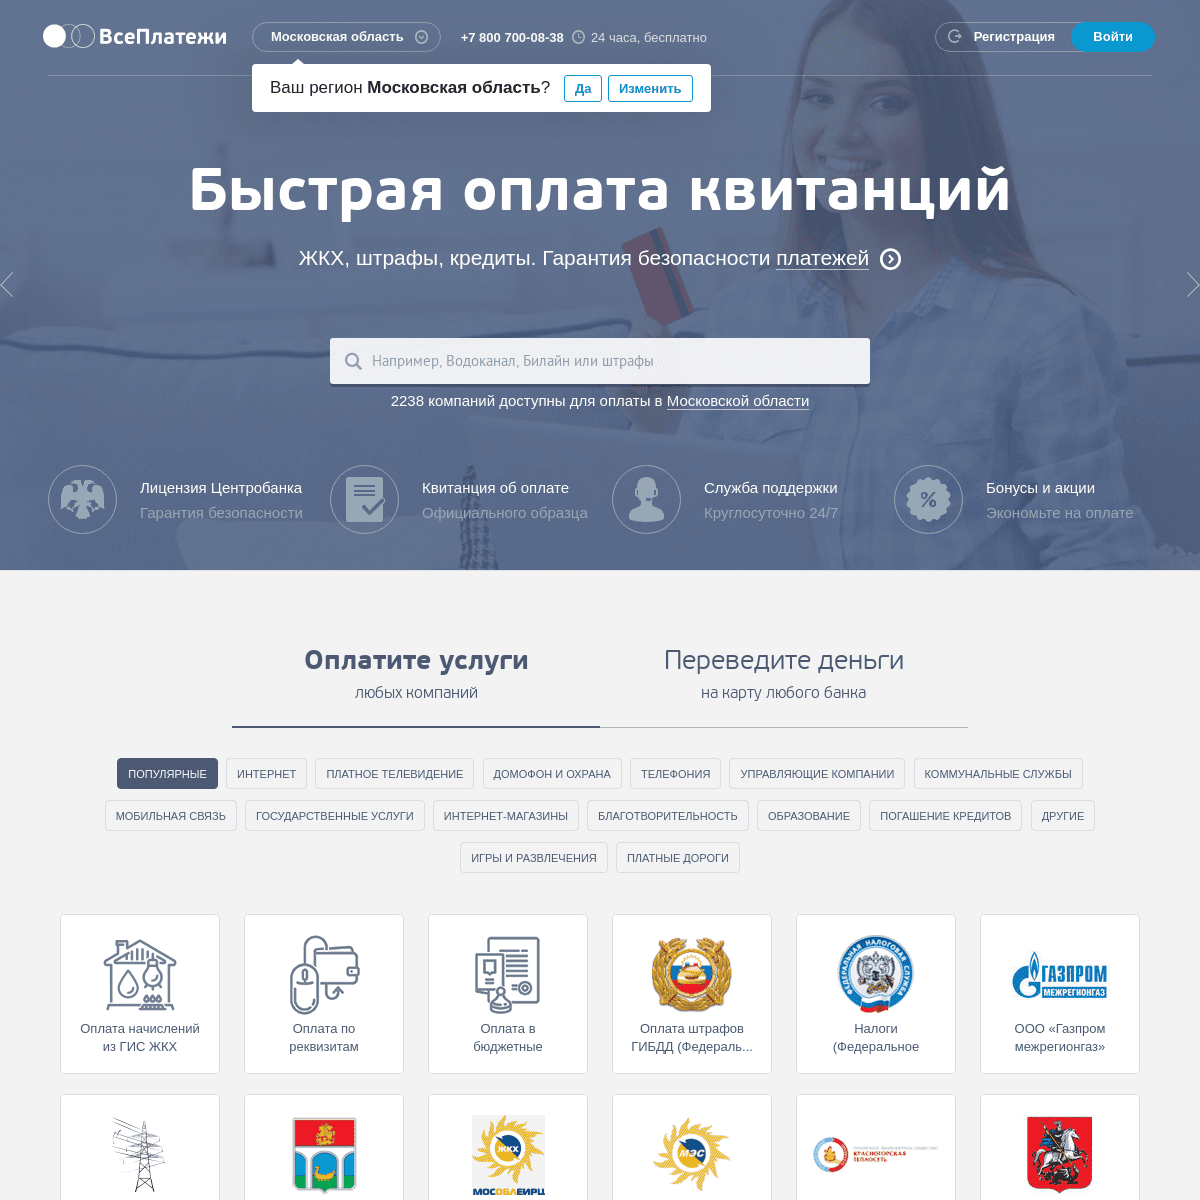 A complete backup of vp.ru